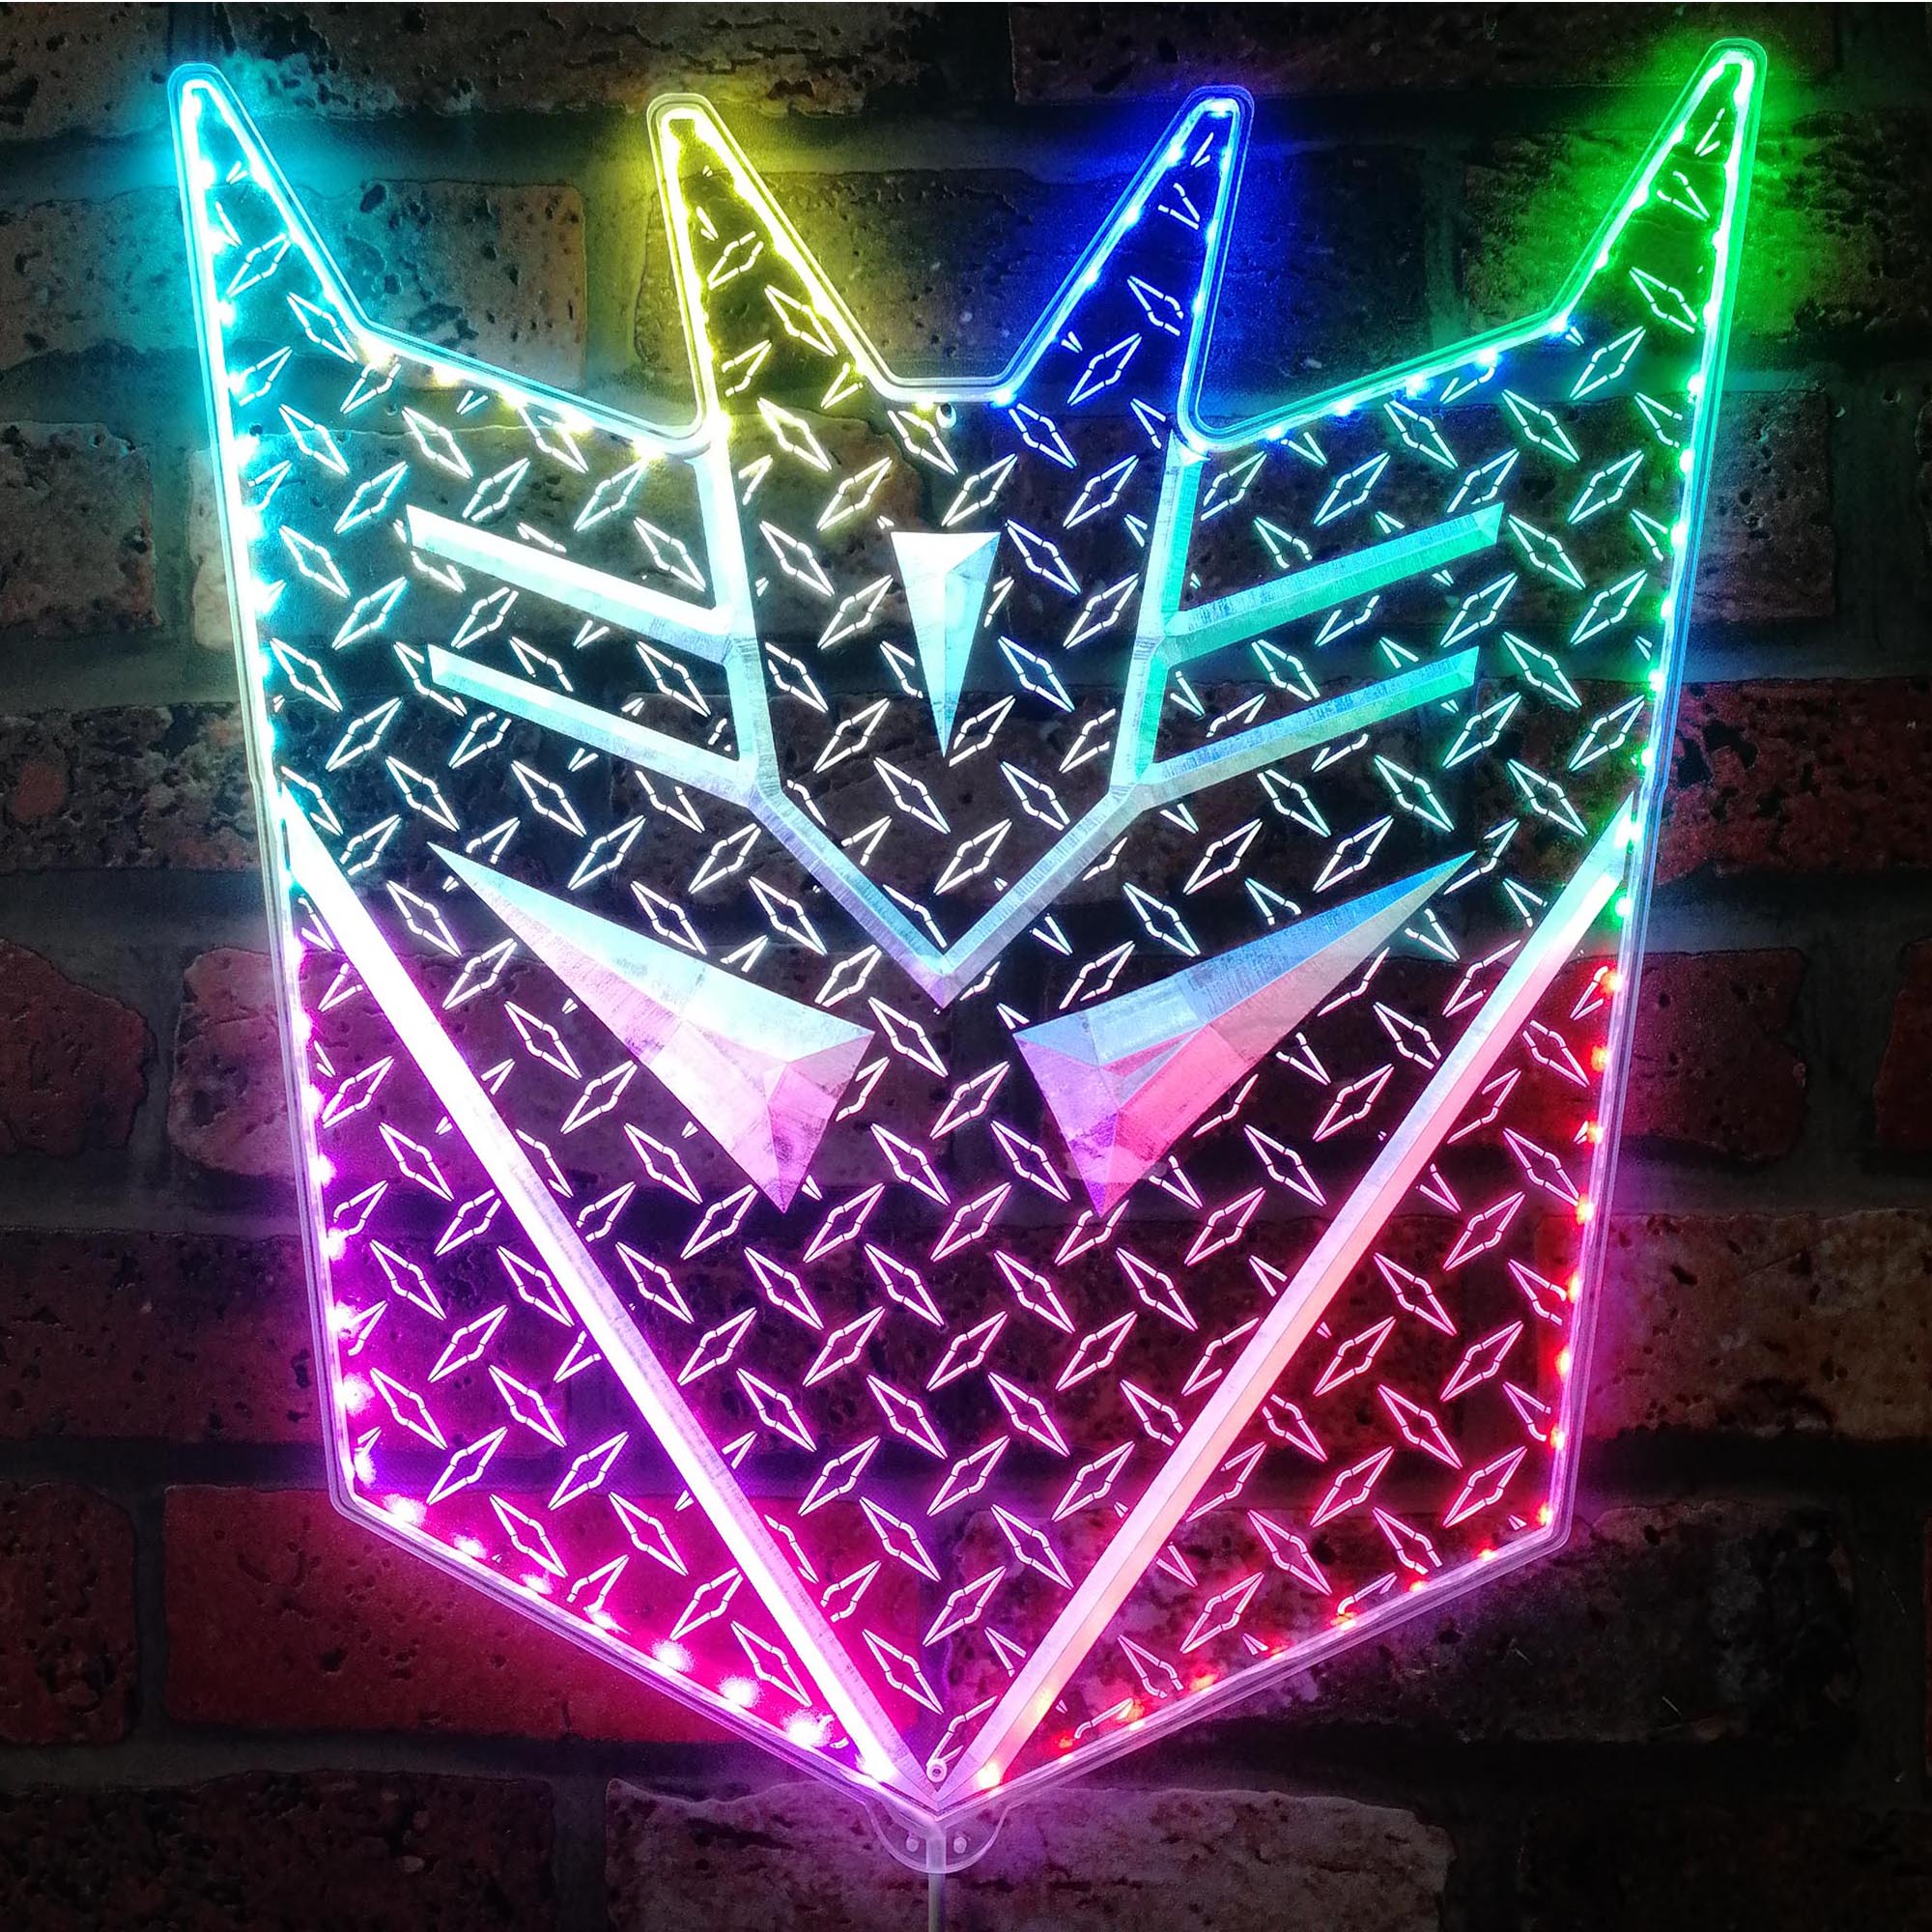 Transformers Dynamic RGB Edge Lit LED Sign